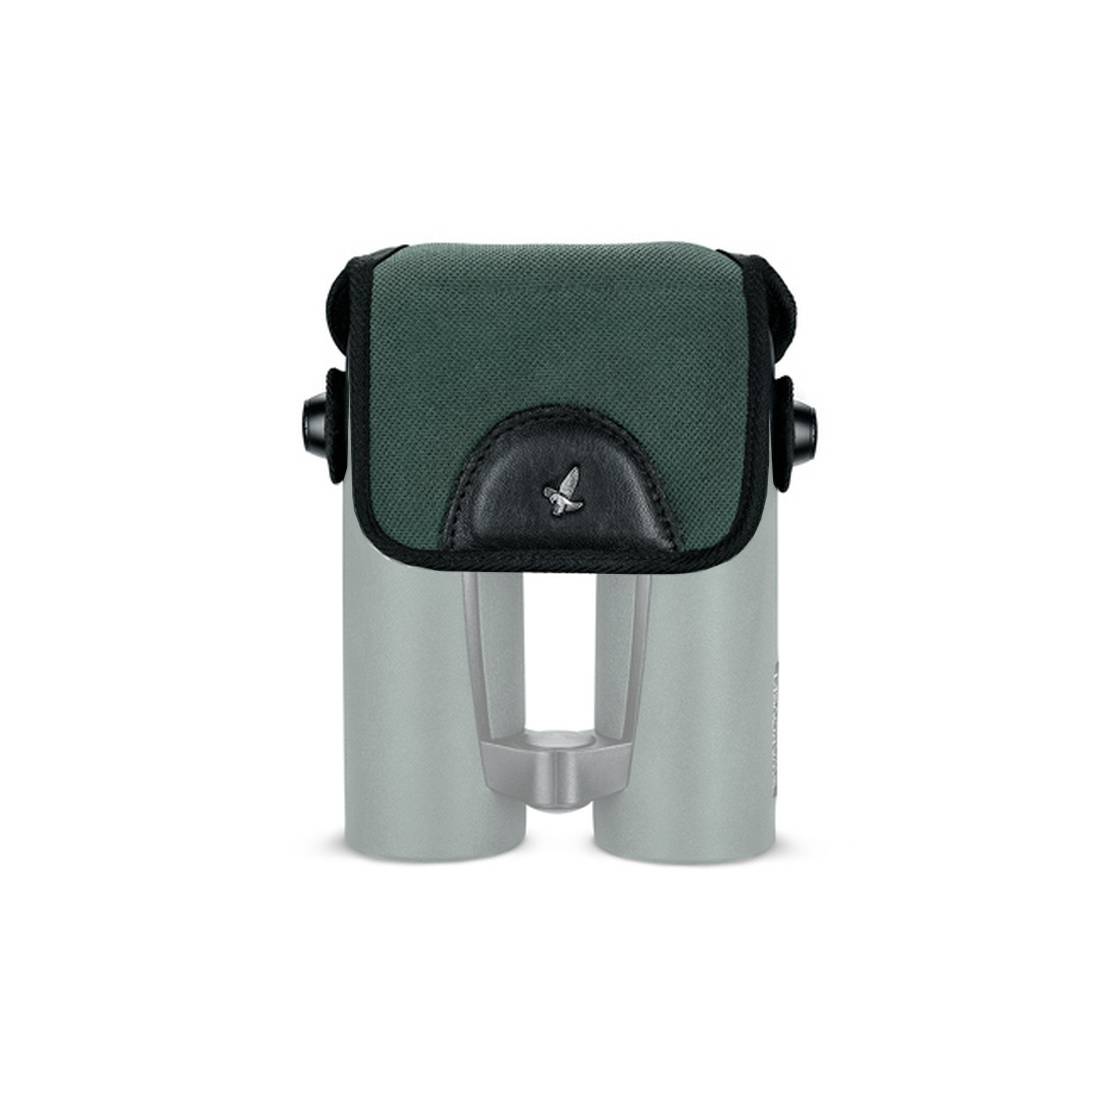 Swarovski bino guard EL for field Pro and NL Pure binocular range